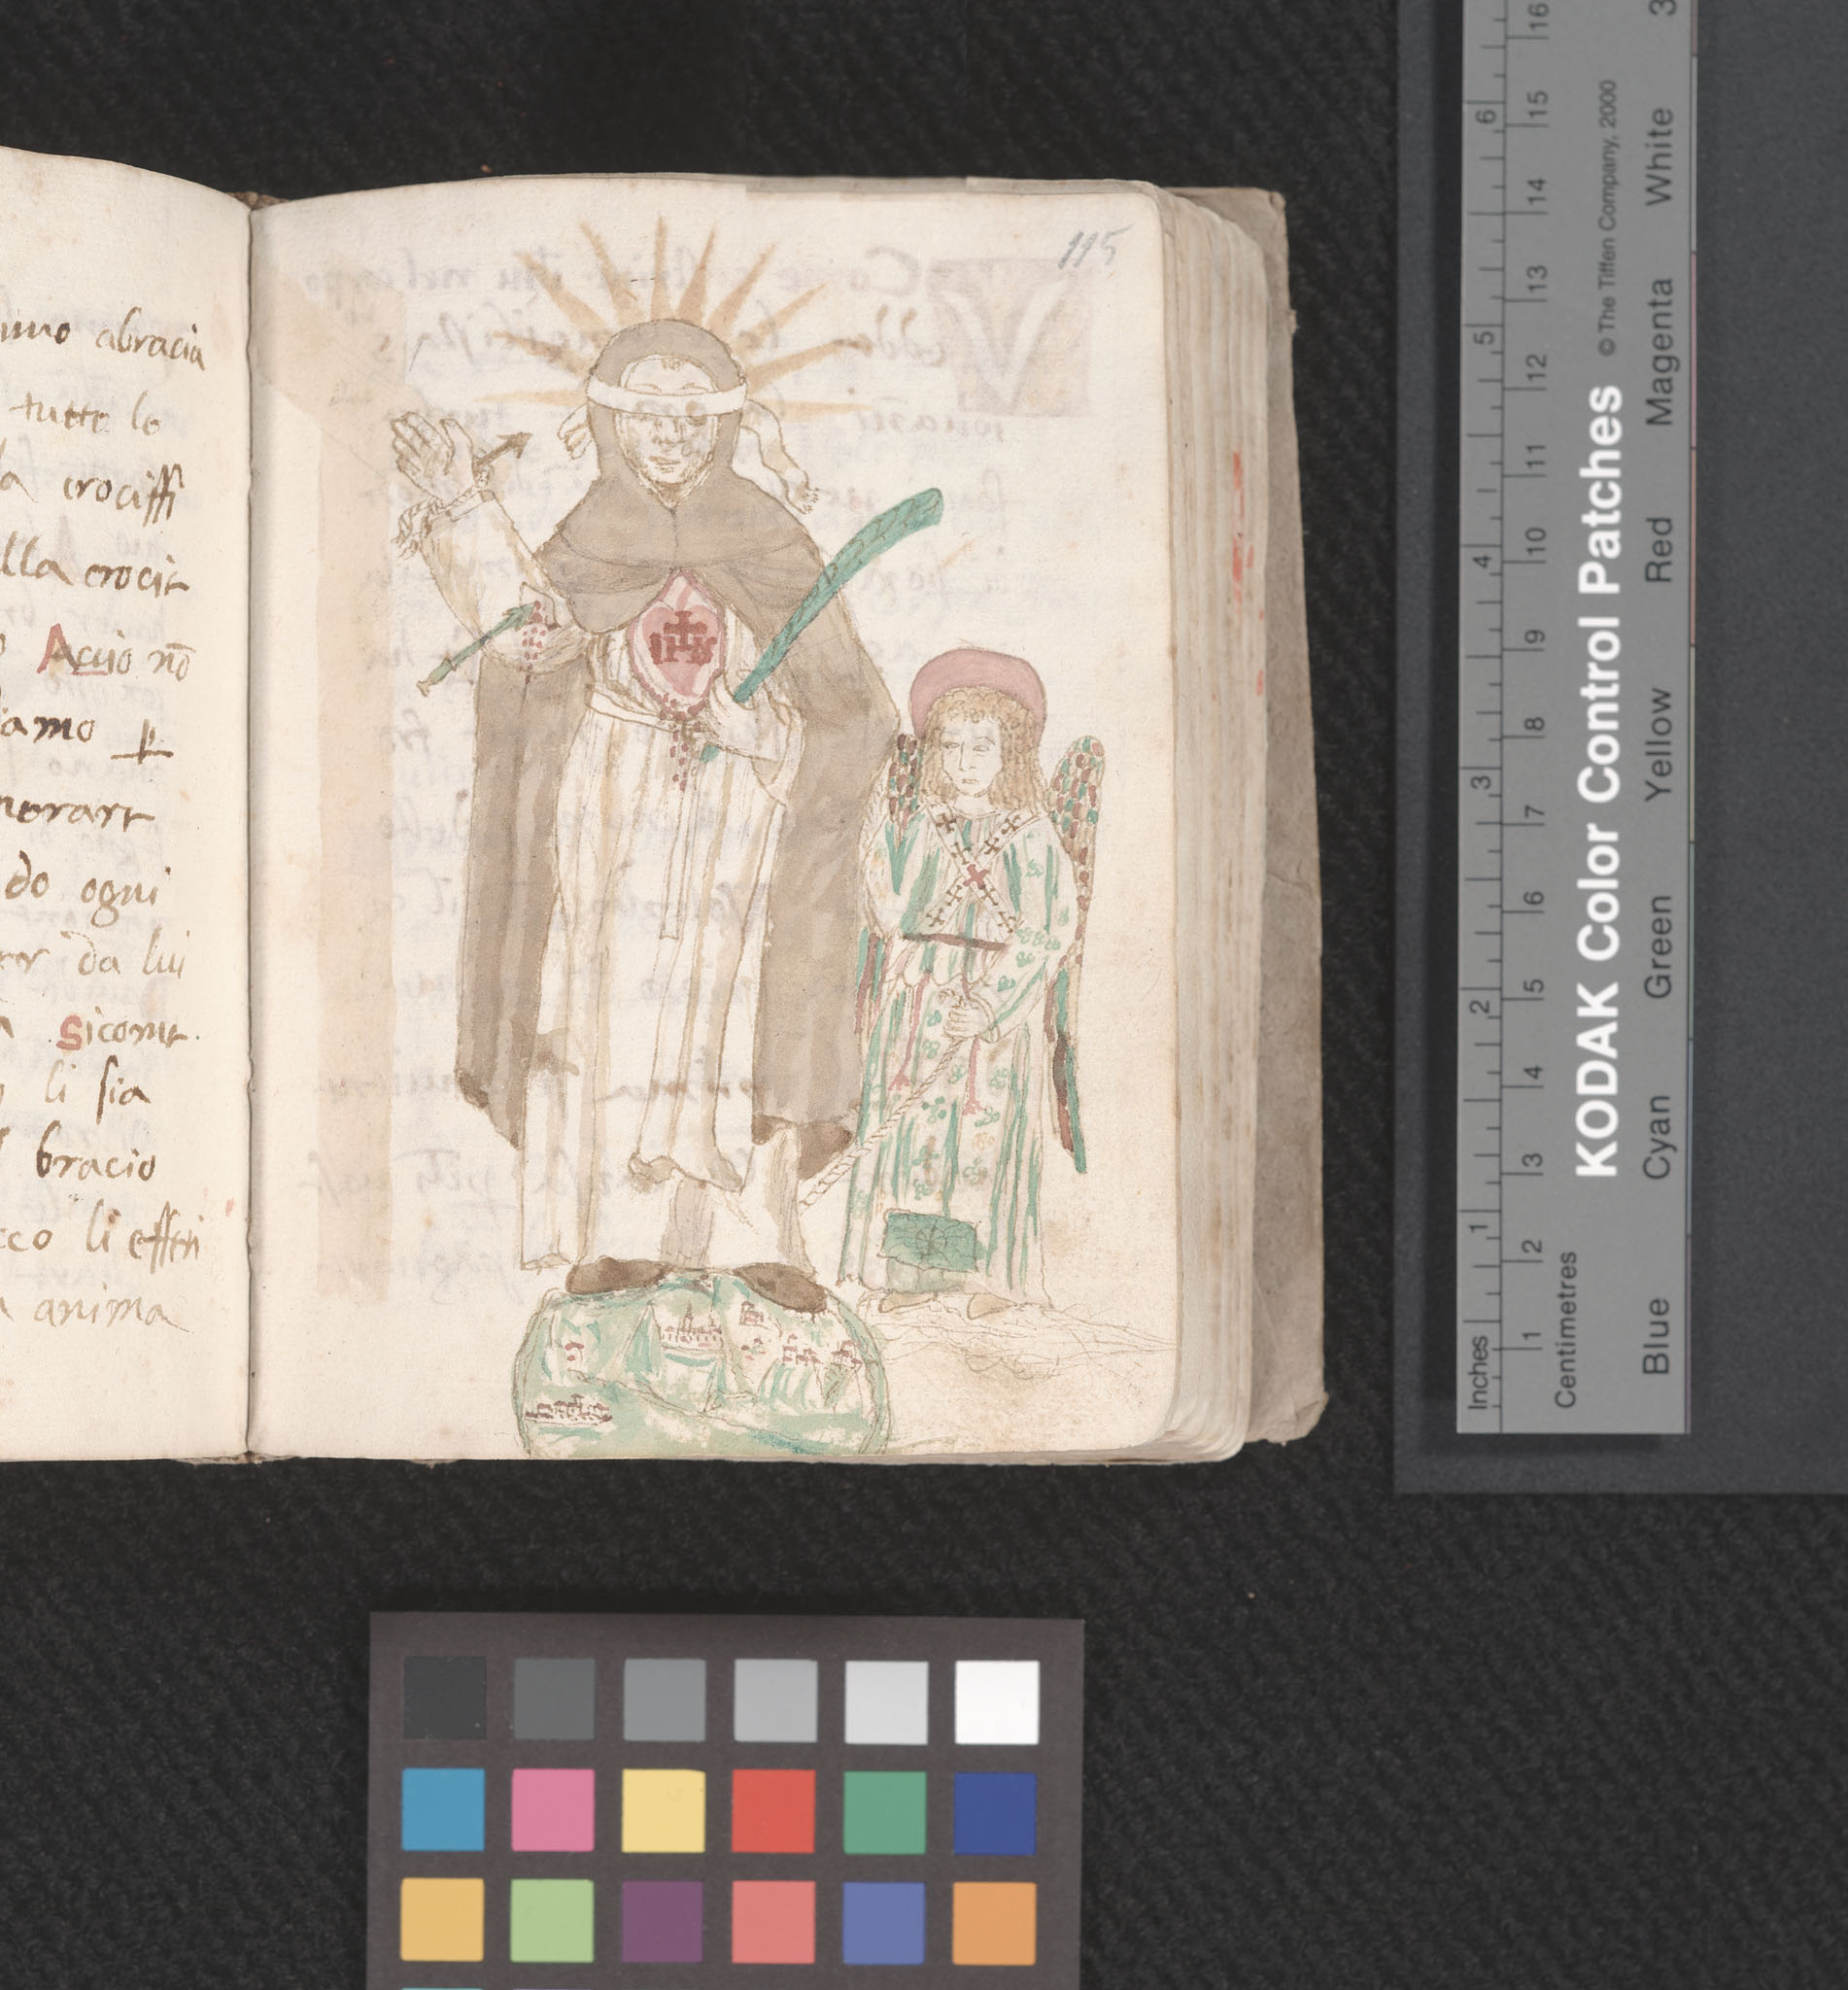 MS A7, Prediche sul nome di Gesu, image of blindfolded monk atop the world with angel, f. 115r